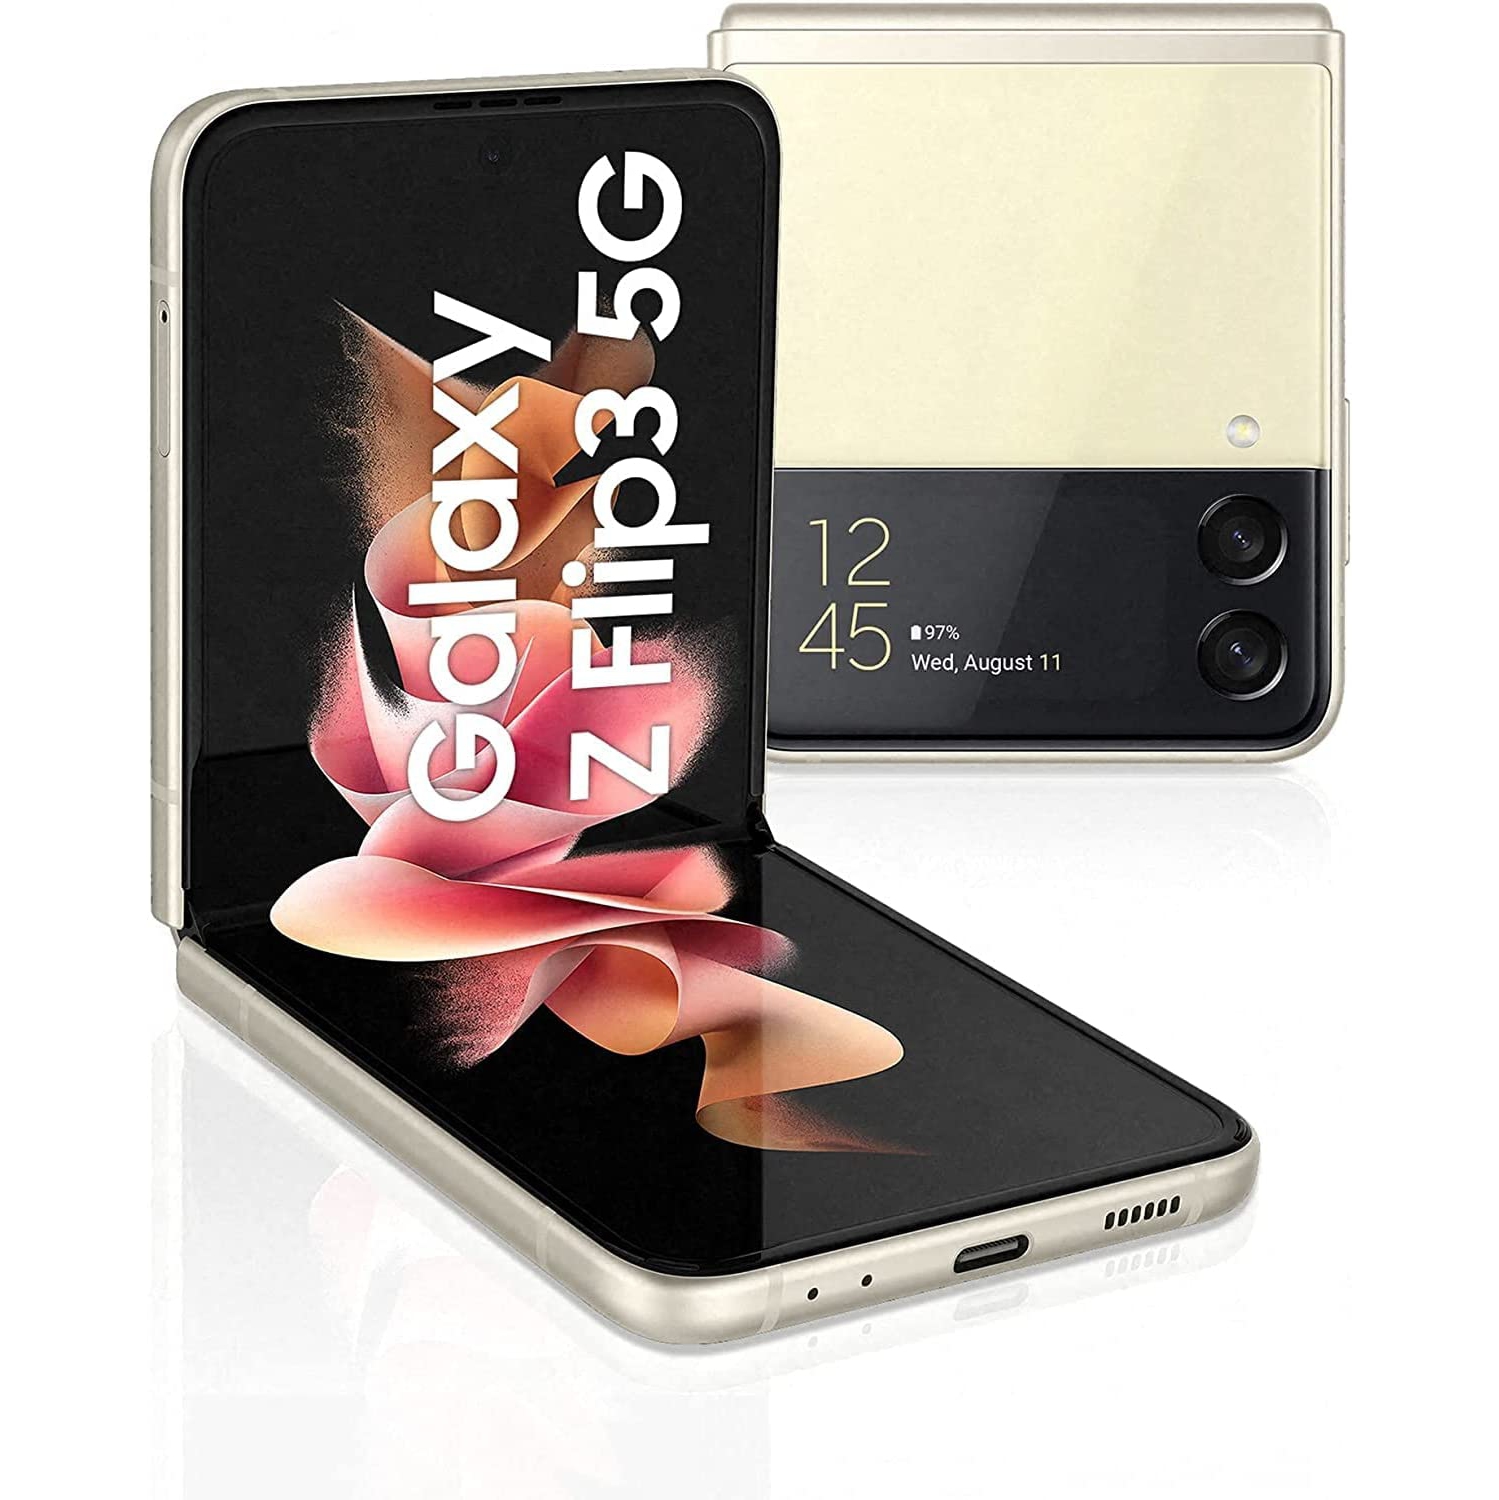 Samsung Galaxy Z Flip3 5G | 128GB - Phantom Black – Smartphone 6.7" 120 Hz Folding Display - 4.1" Cover Screen - Unlocked – Cream- Certified Pre-owned